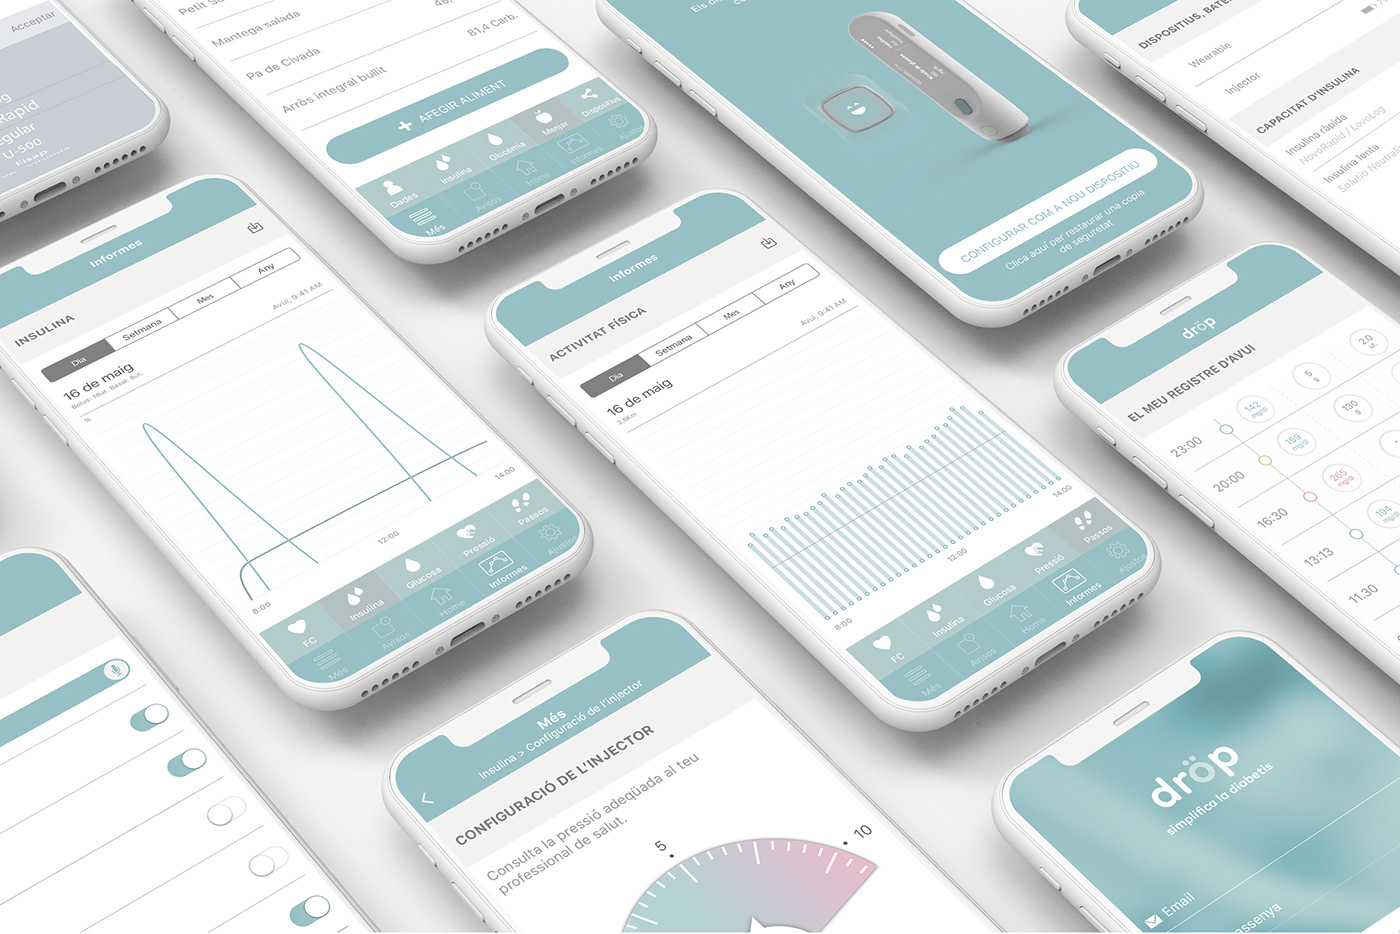 diabetes Health productdesign industrialdesign app graphicdesign designforhealth DiabetesType1 ux UI